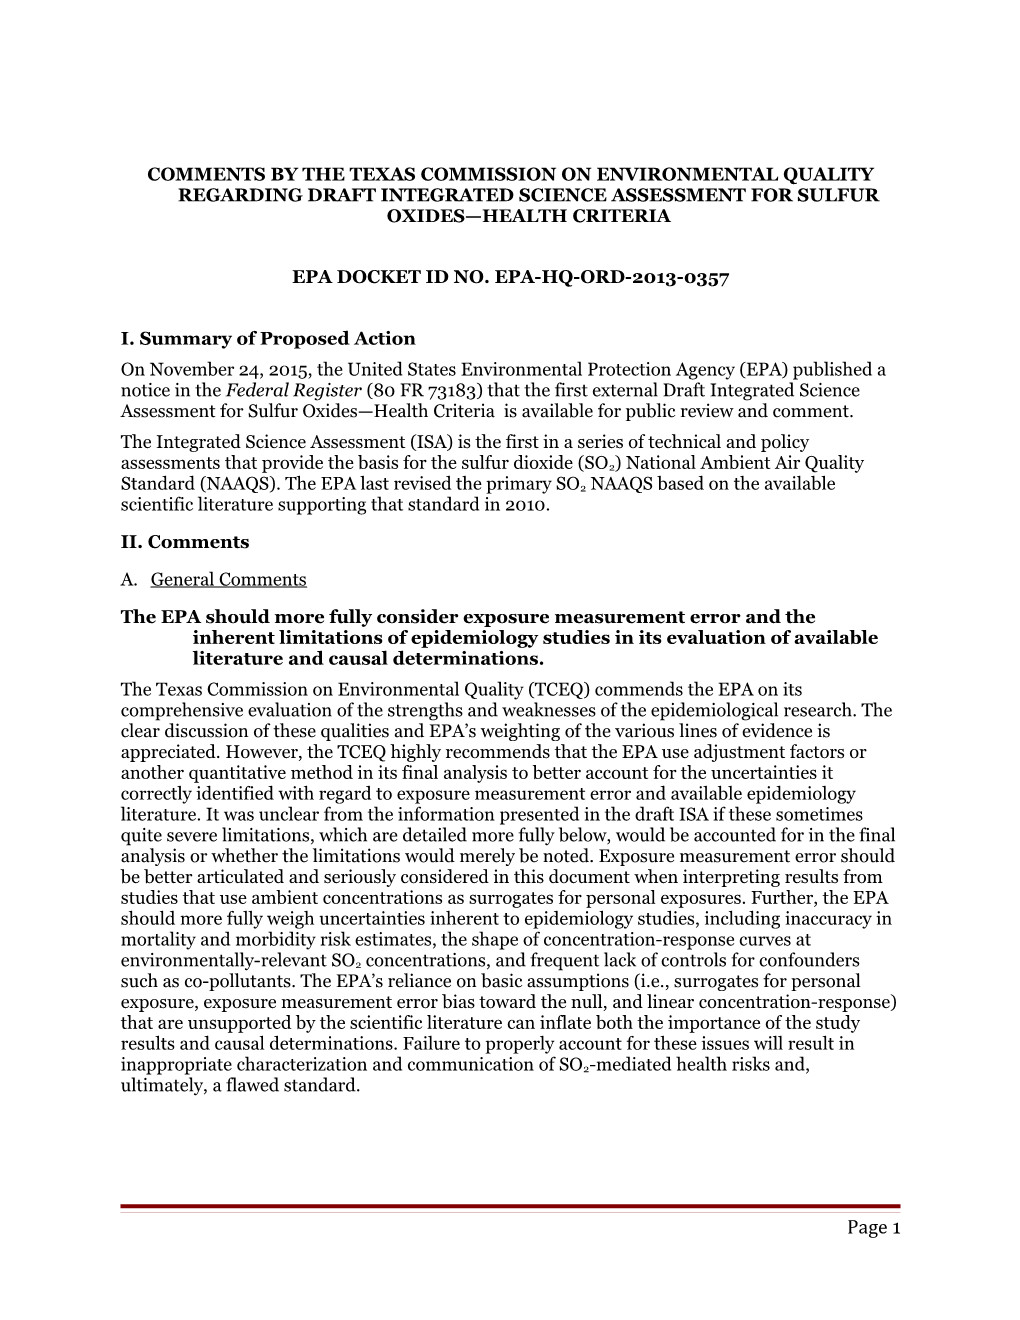 EPA Docket ID NO. EPA-HQ-Ord-2013-0357